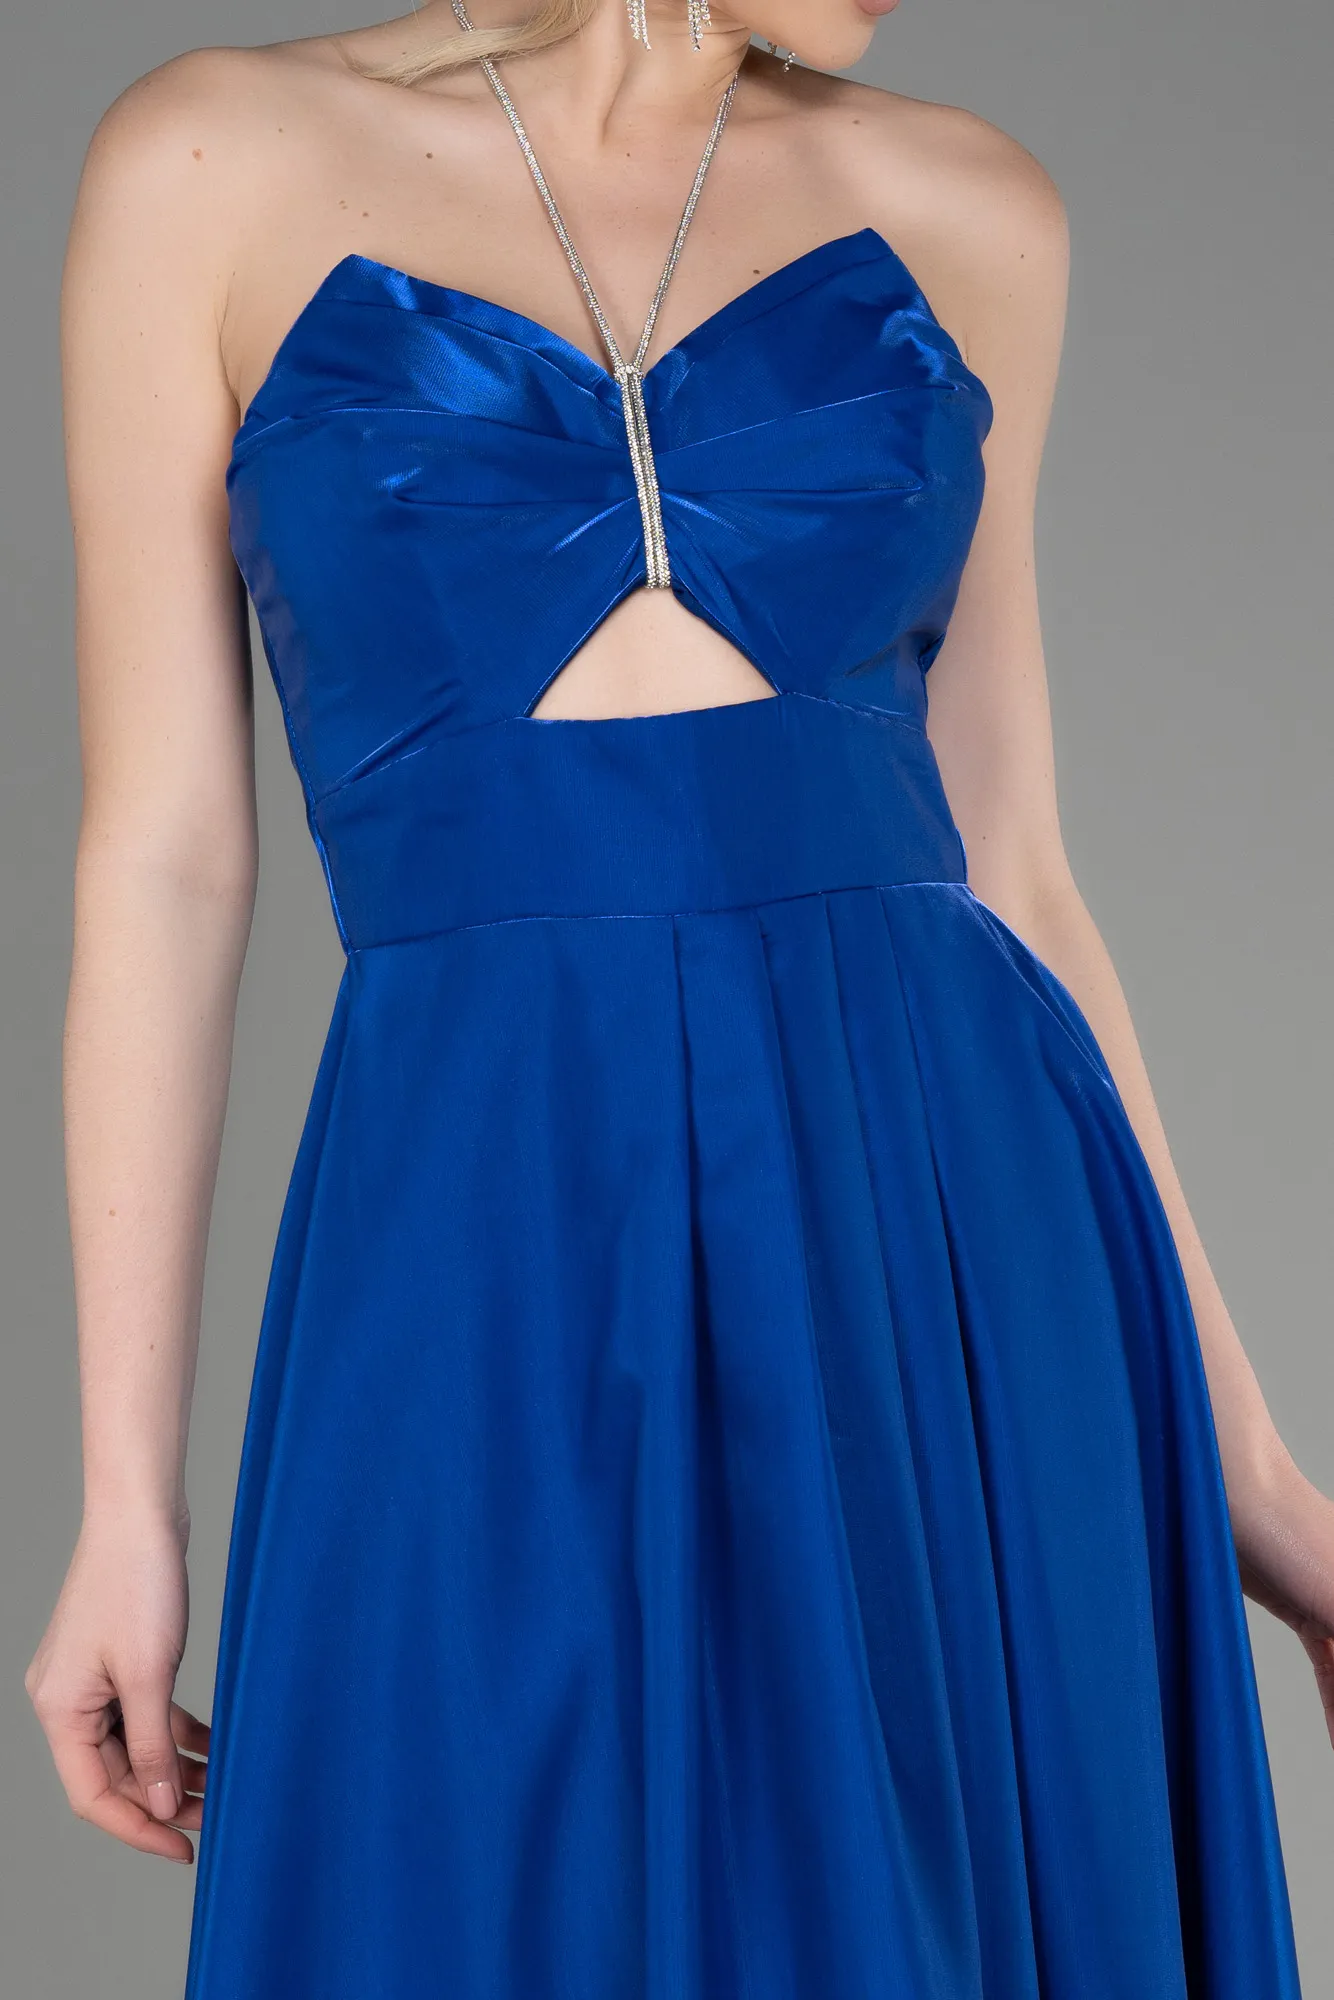 Sax Blue-Long Satin Evening Dress ABU3755